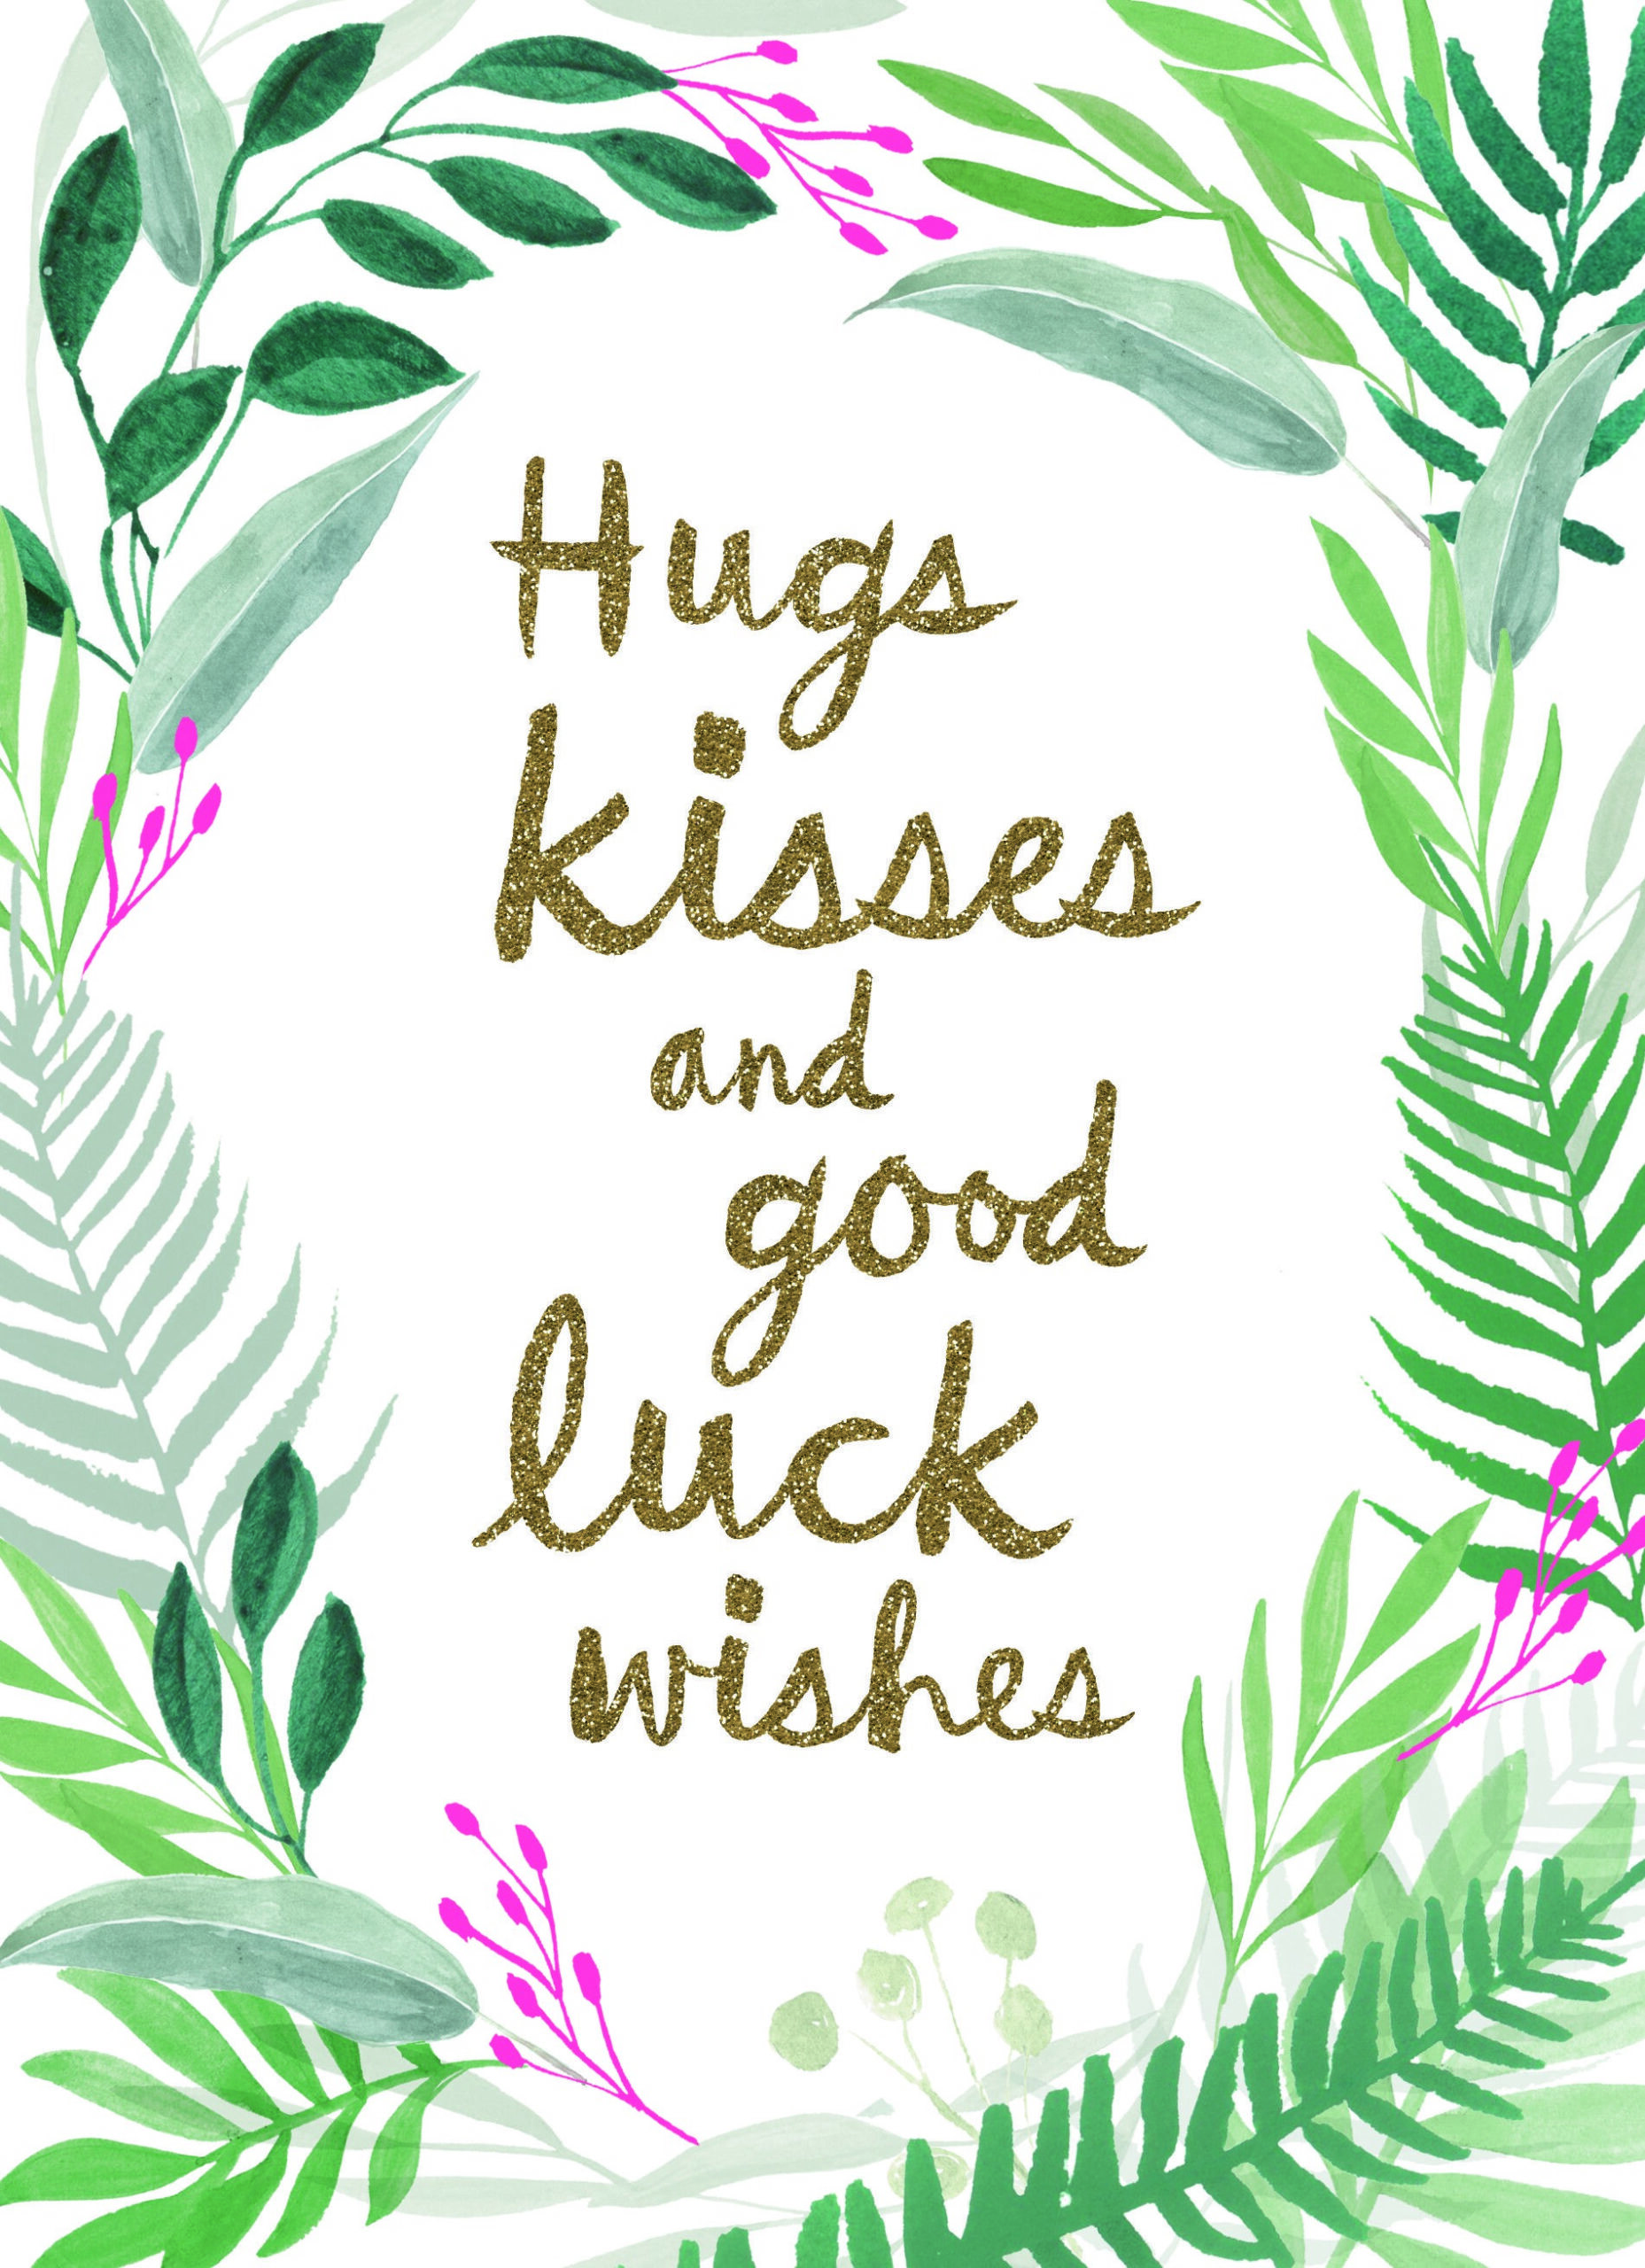 Hugs kisses and good luck wishes | Hallmark